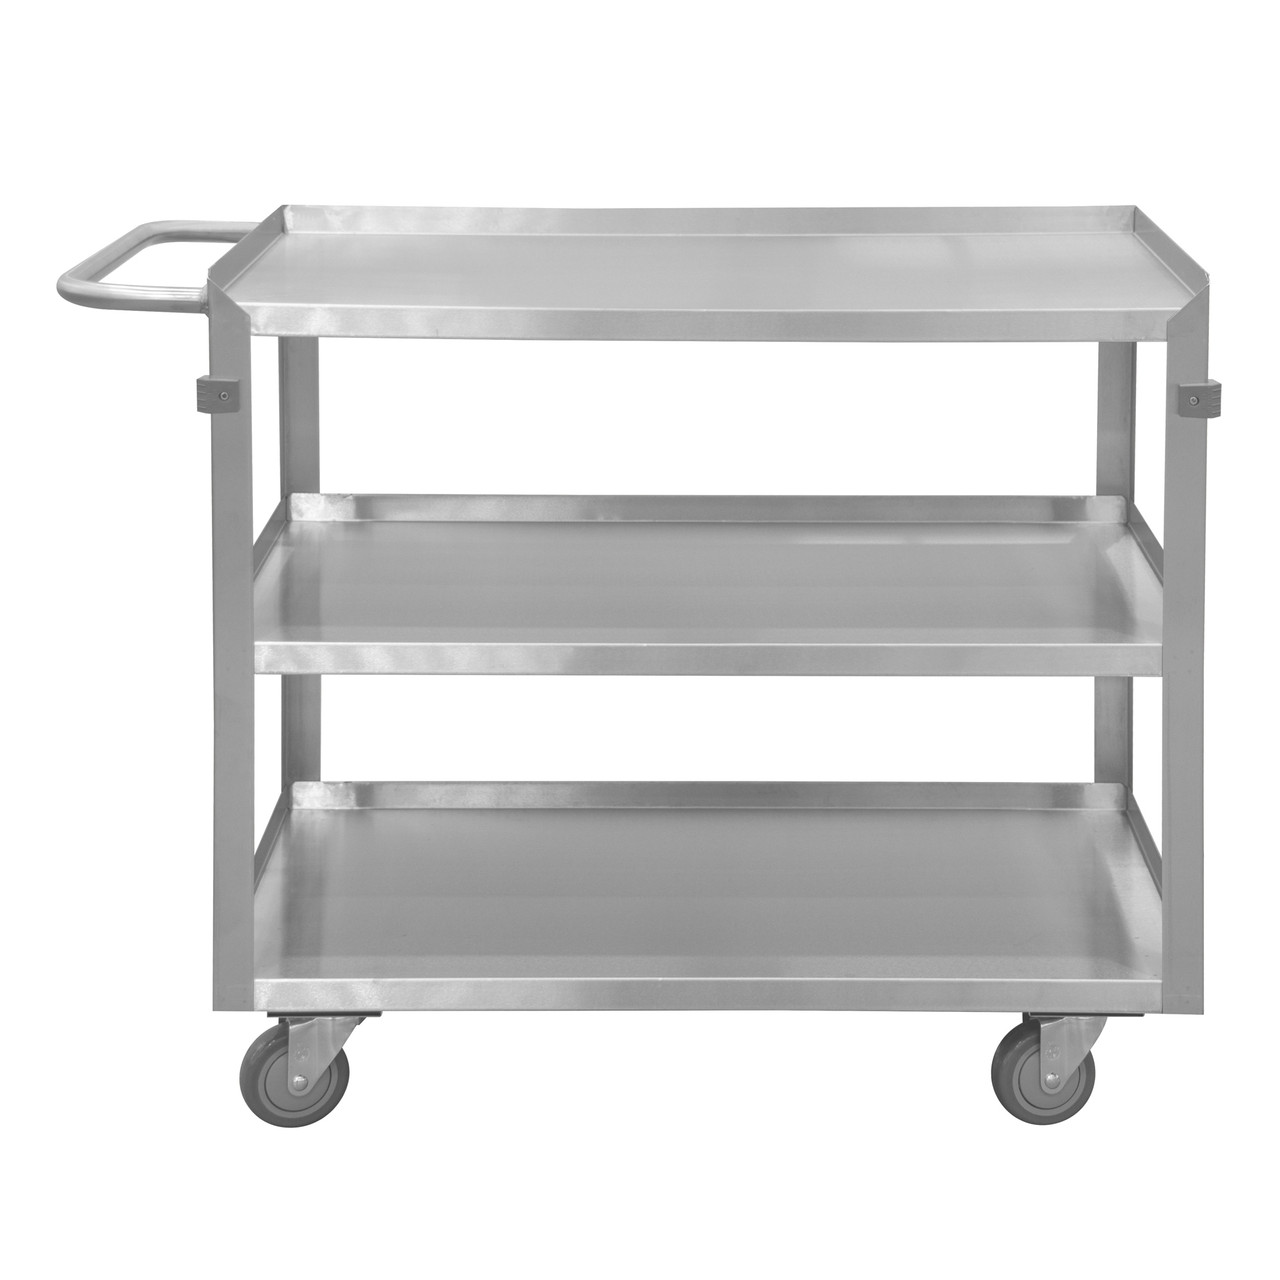 Durham Stainless Steel Stock Cart, 3 shelves, 17 x 30-7/16 x 34